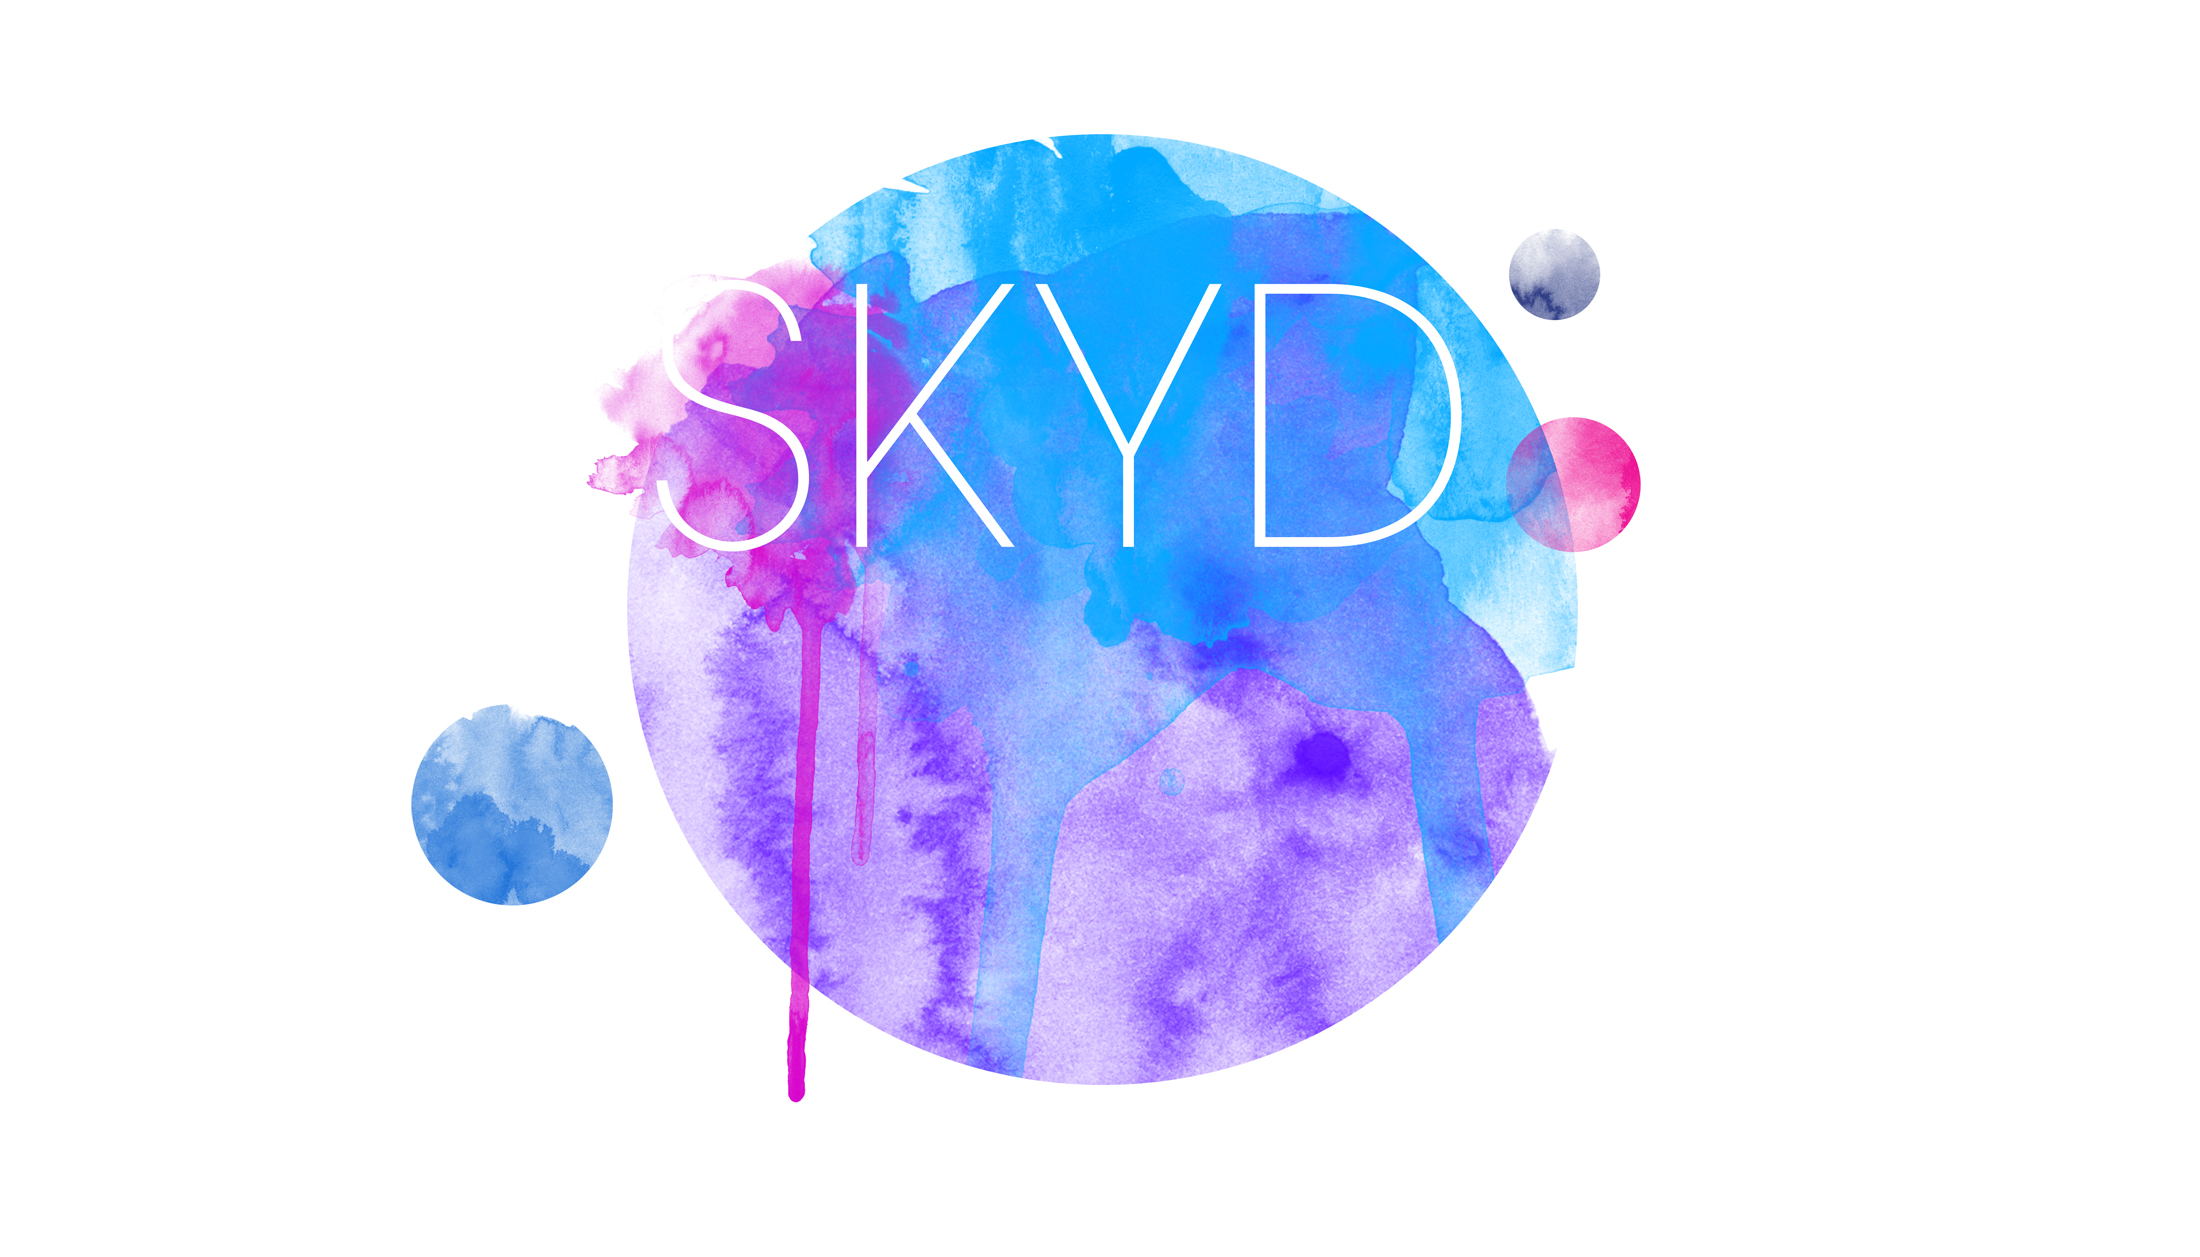 Skyd's 2014 Fundraiser logo